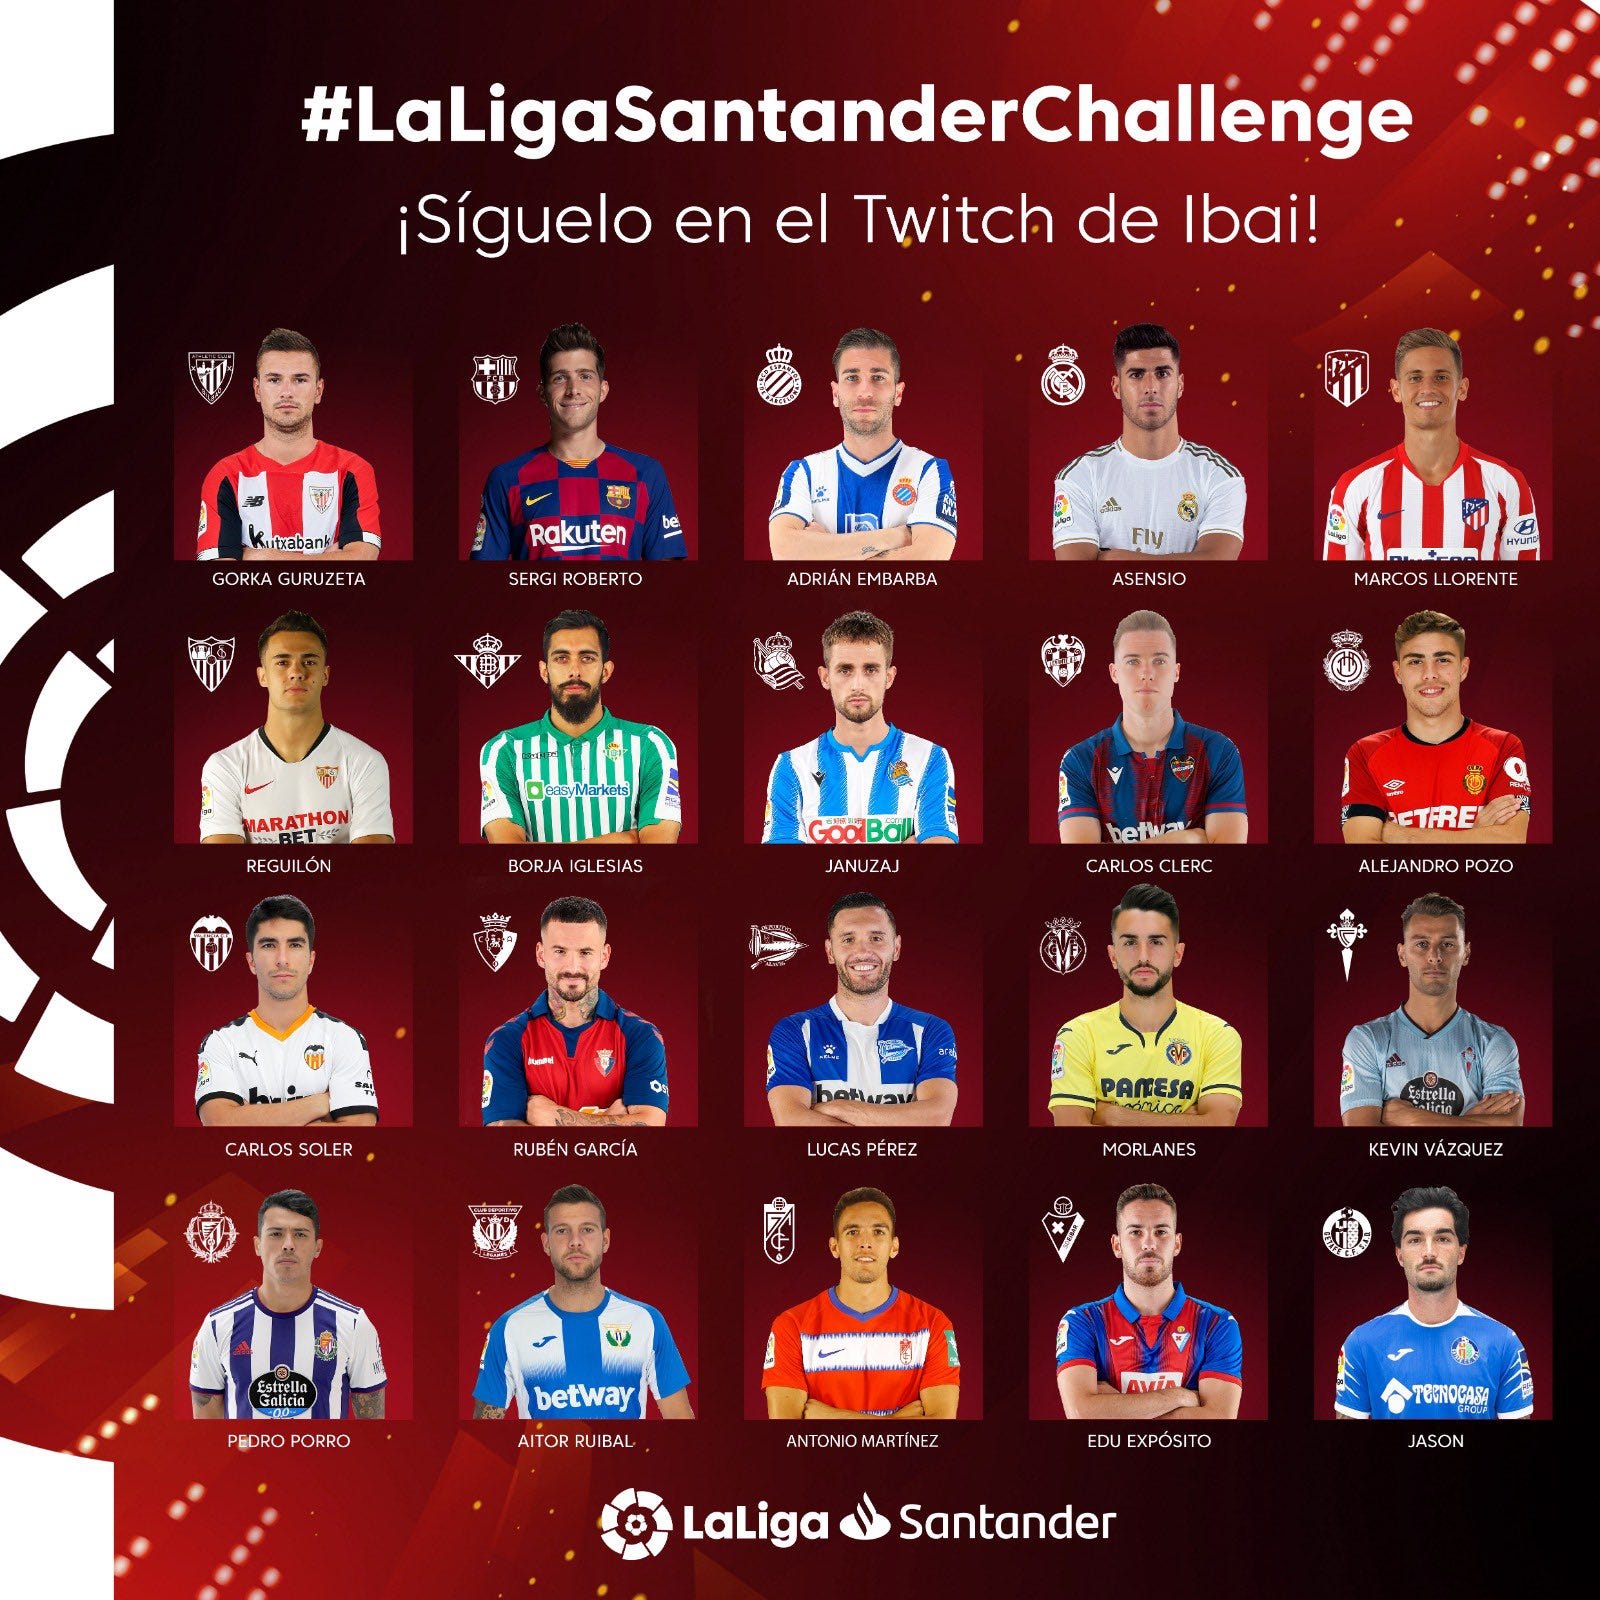 La Liga challenge contenders